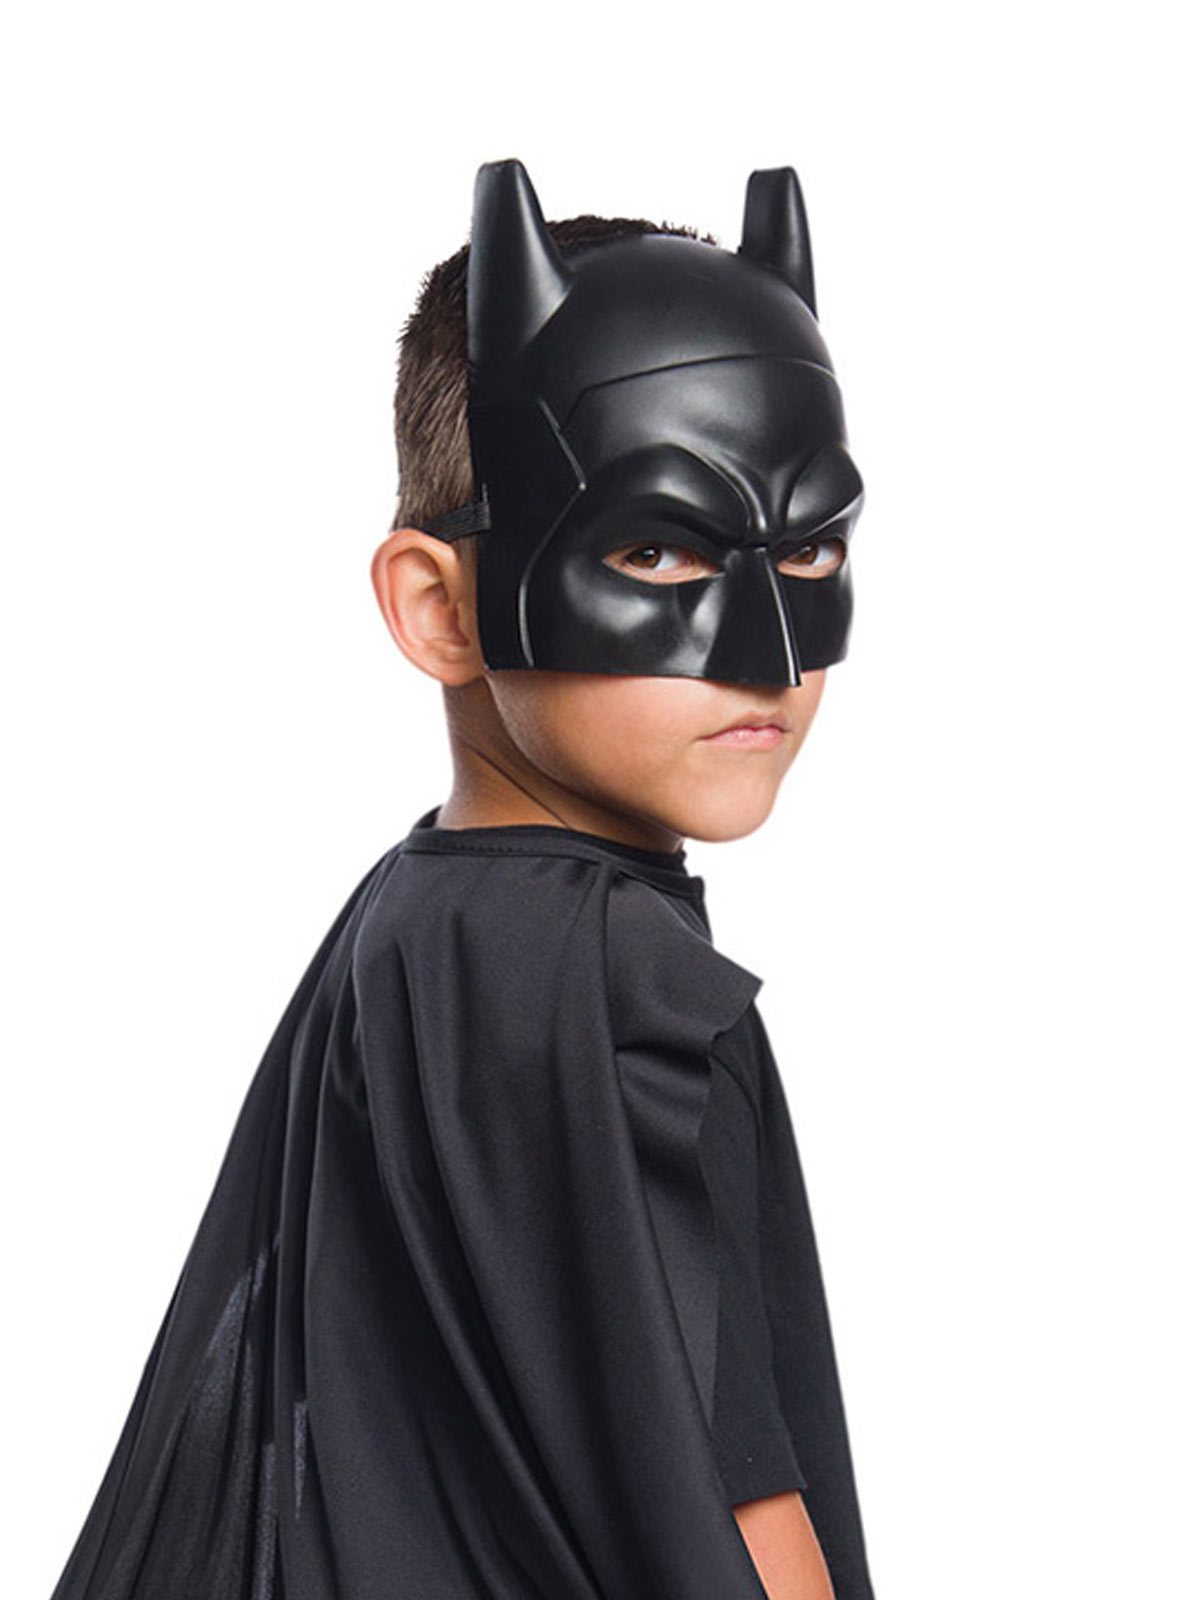 Costume Child Batman Set